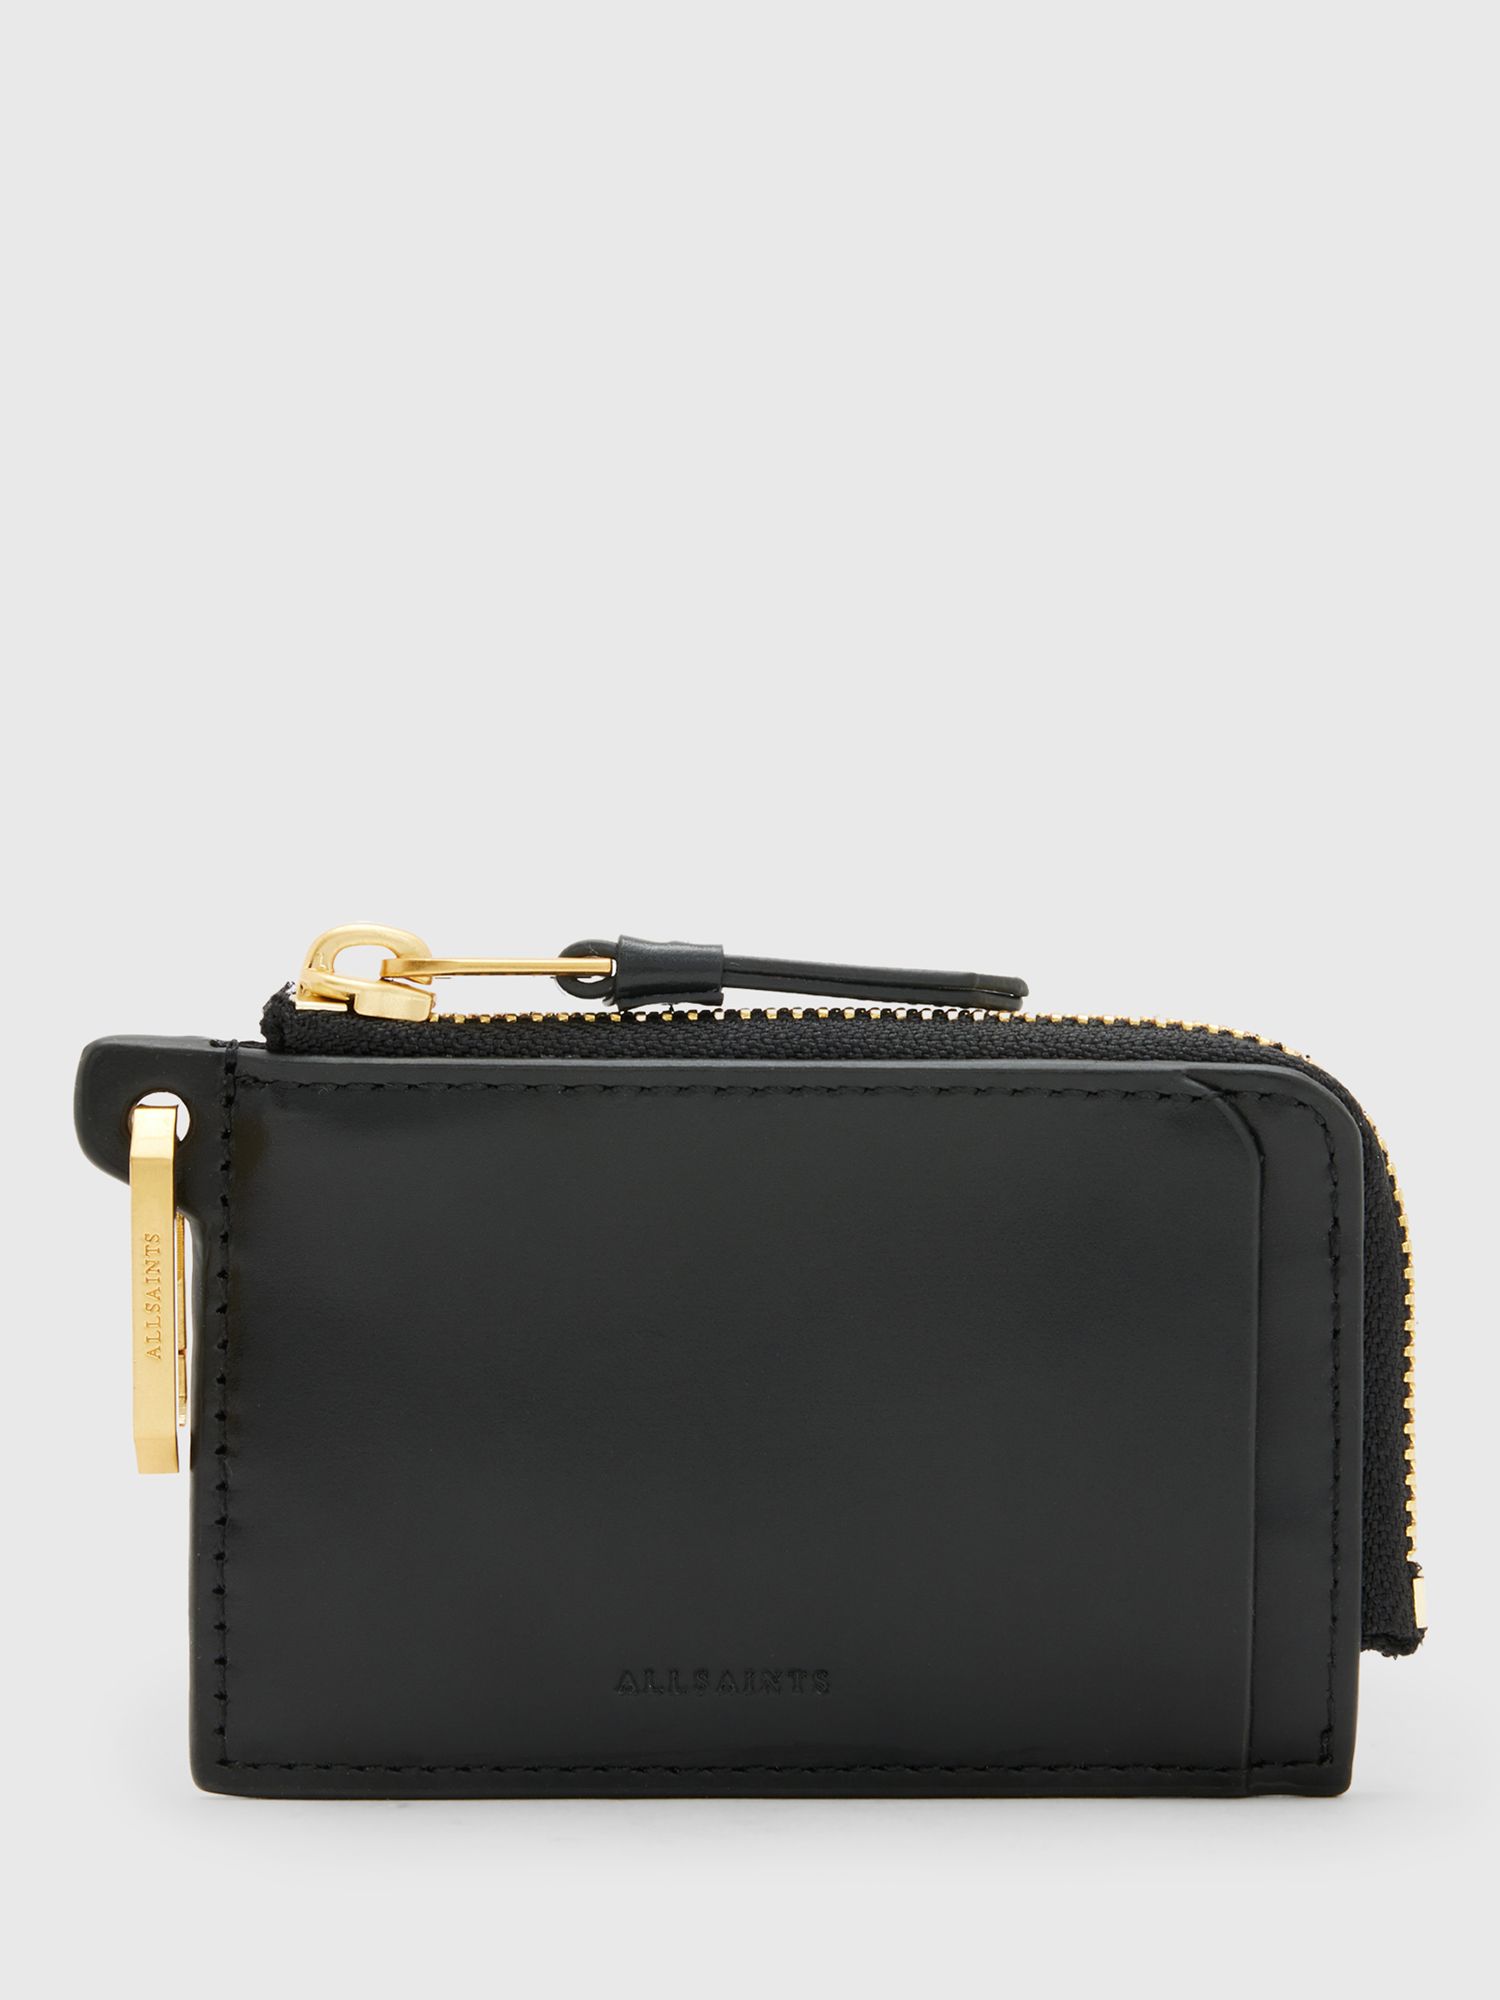 AllSaints Remy Leather Wallet, Black at John Lewis & Partners